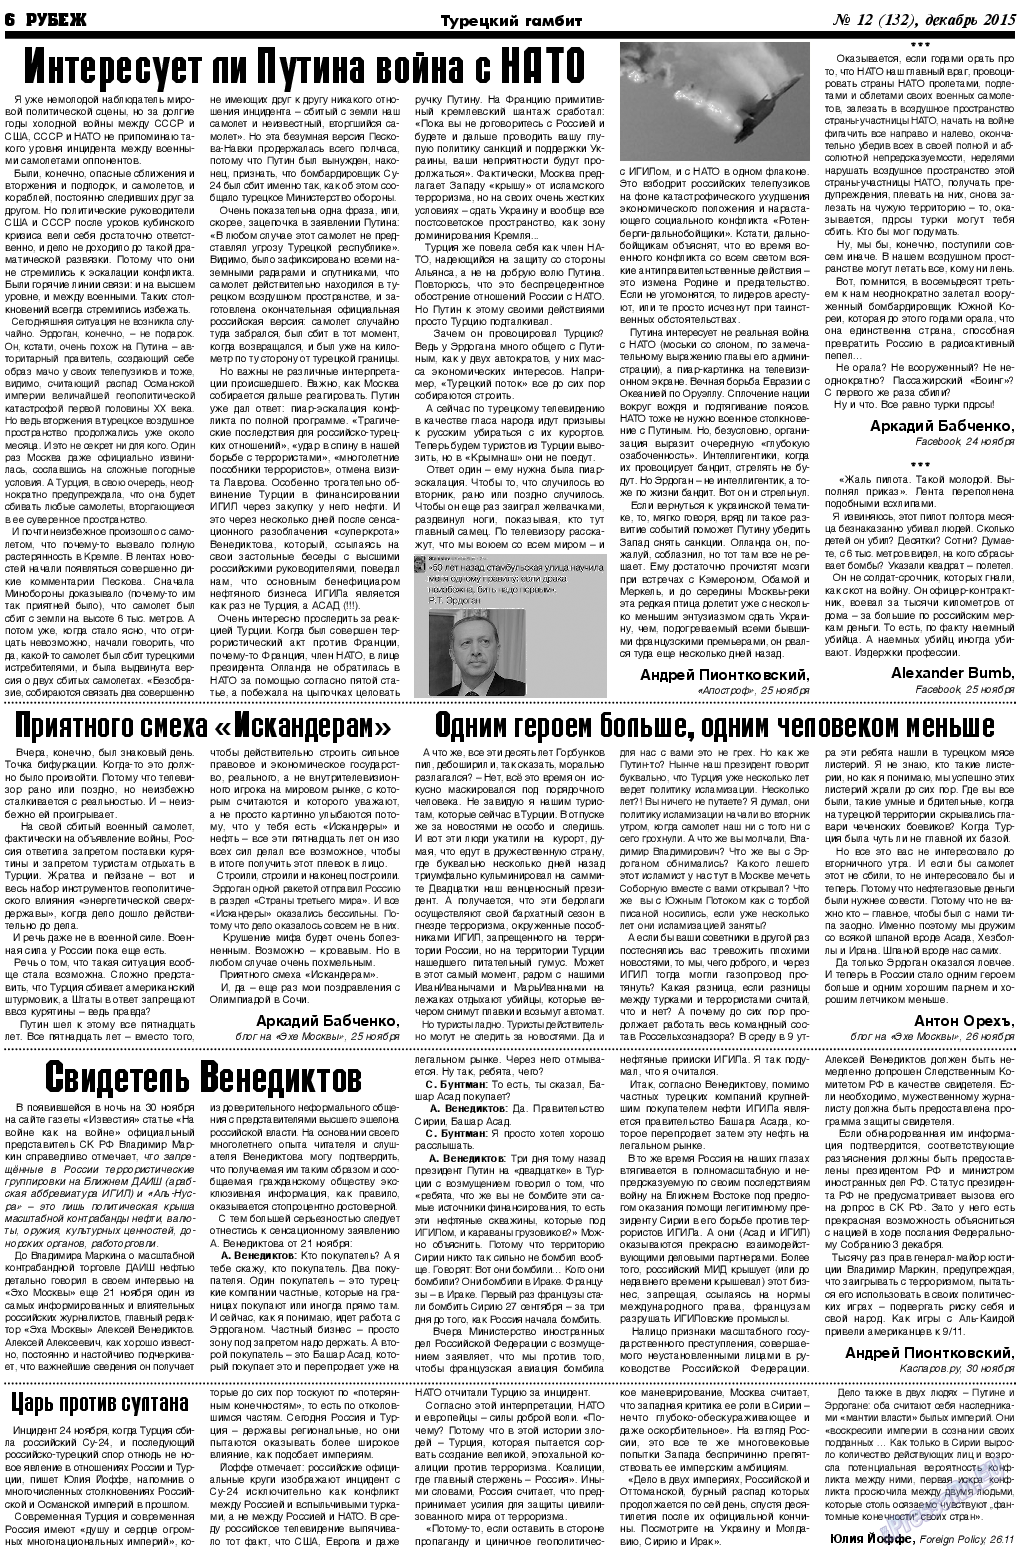 Рубеж, газета. 2015 №12 стр.6